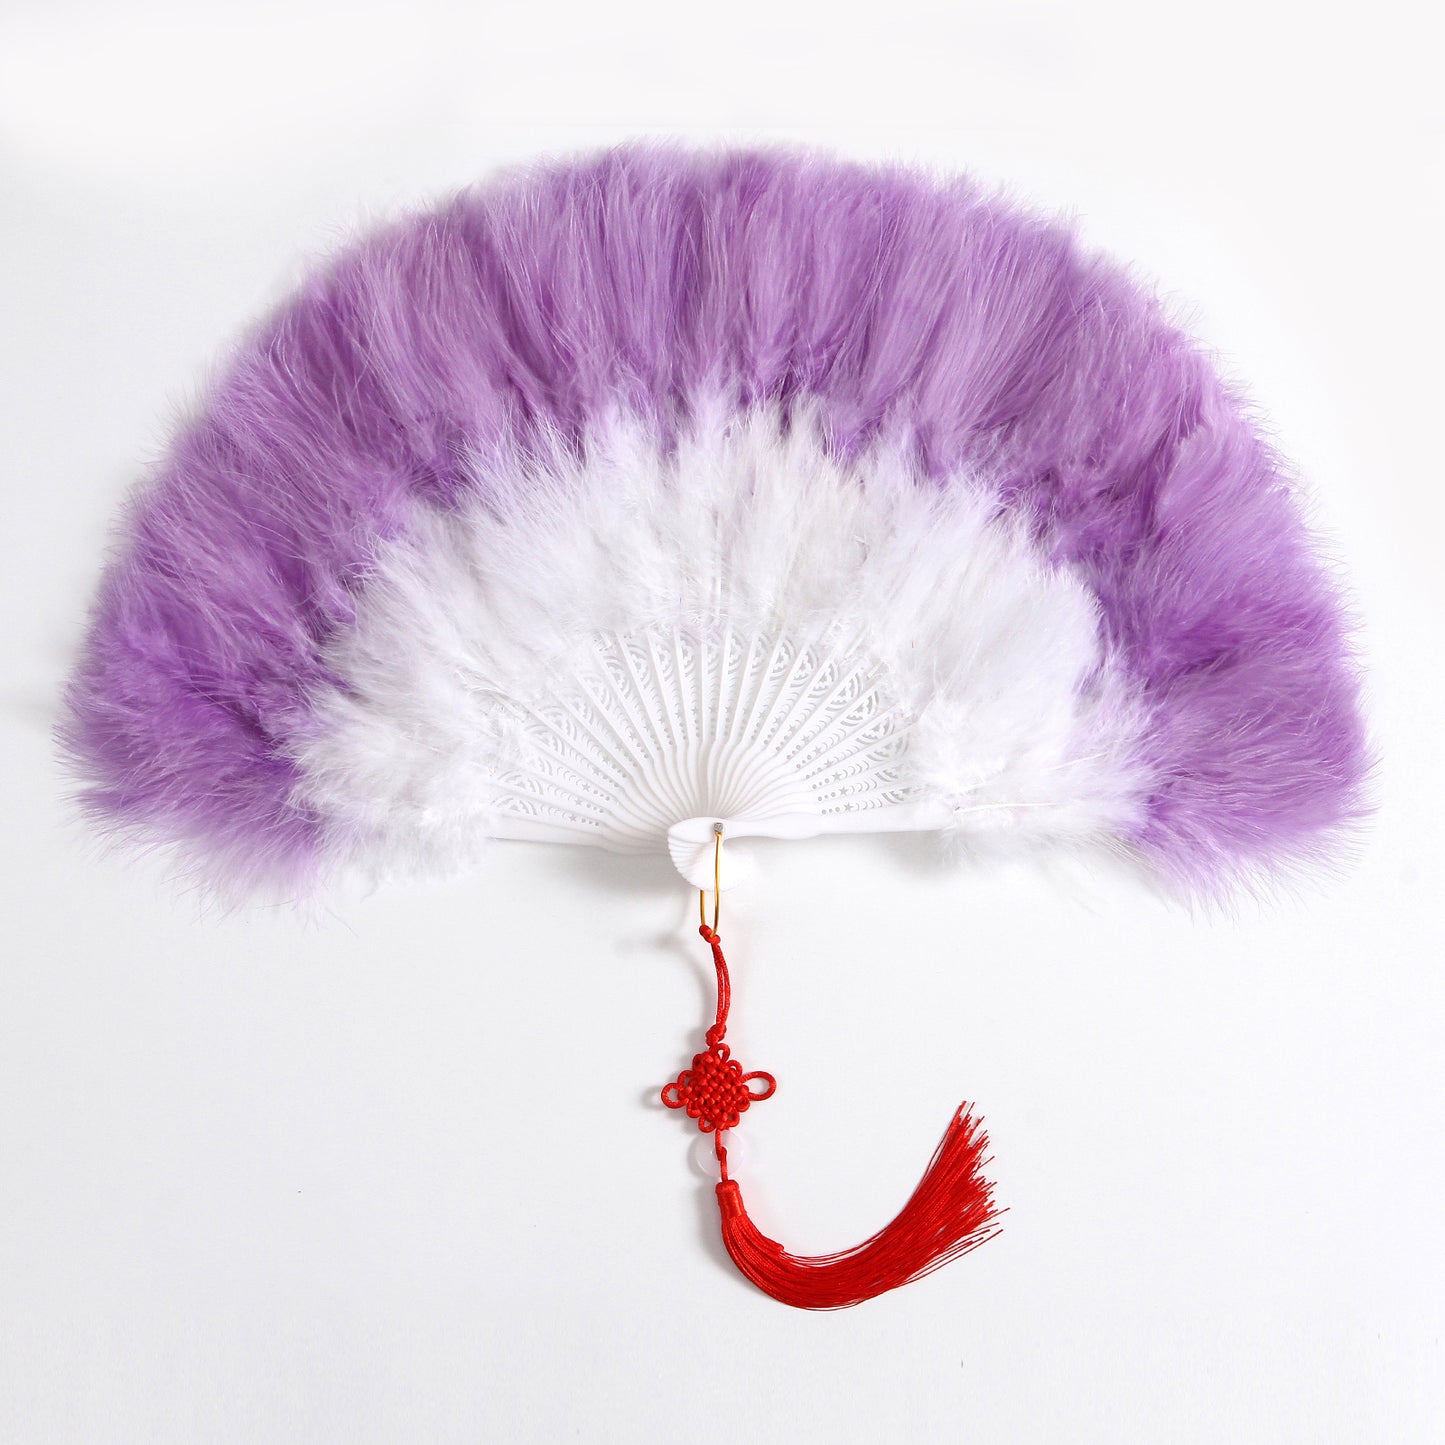 Feather Fan, Baby Pink Marabou Feather Fan 11 x 20 – Cynthias